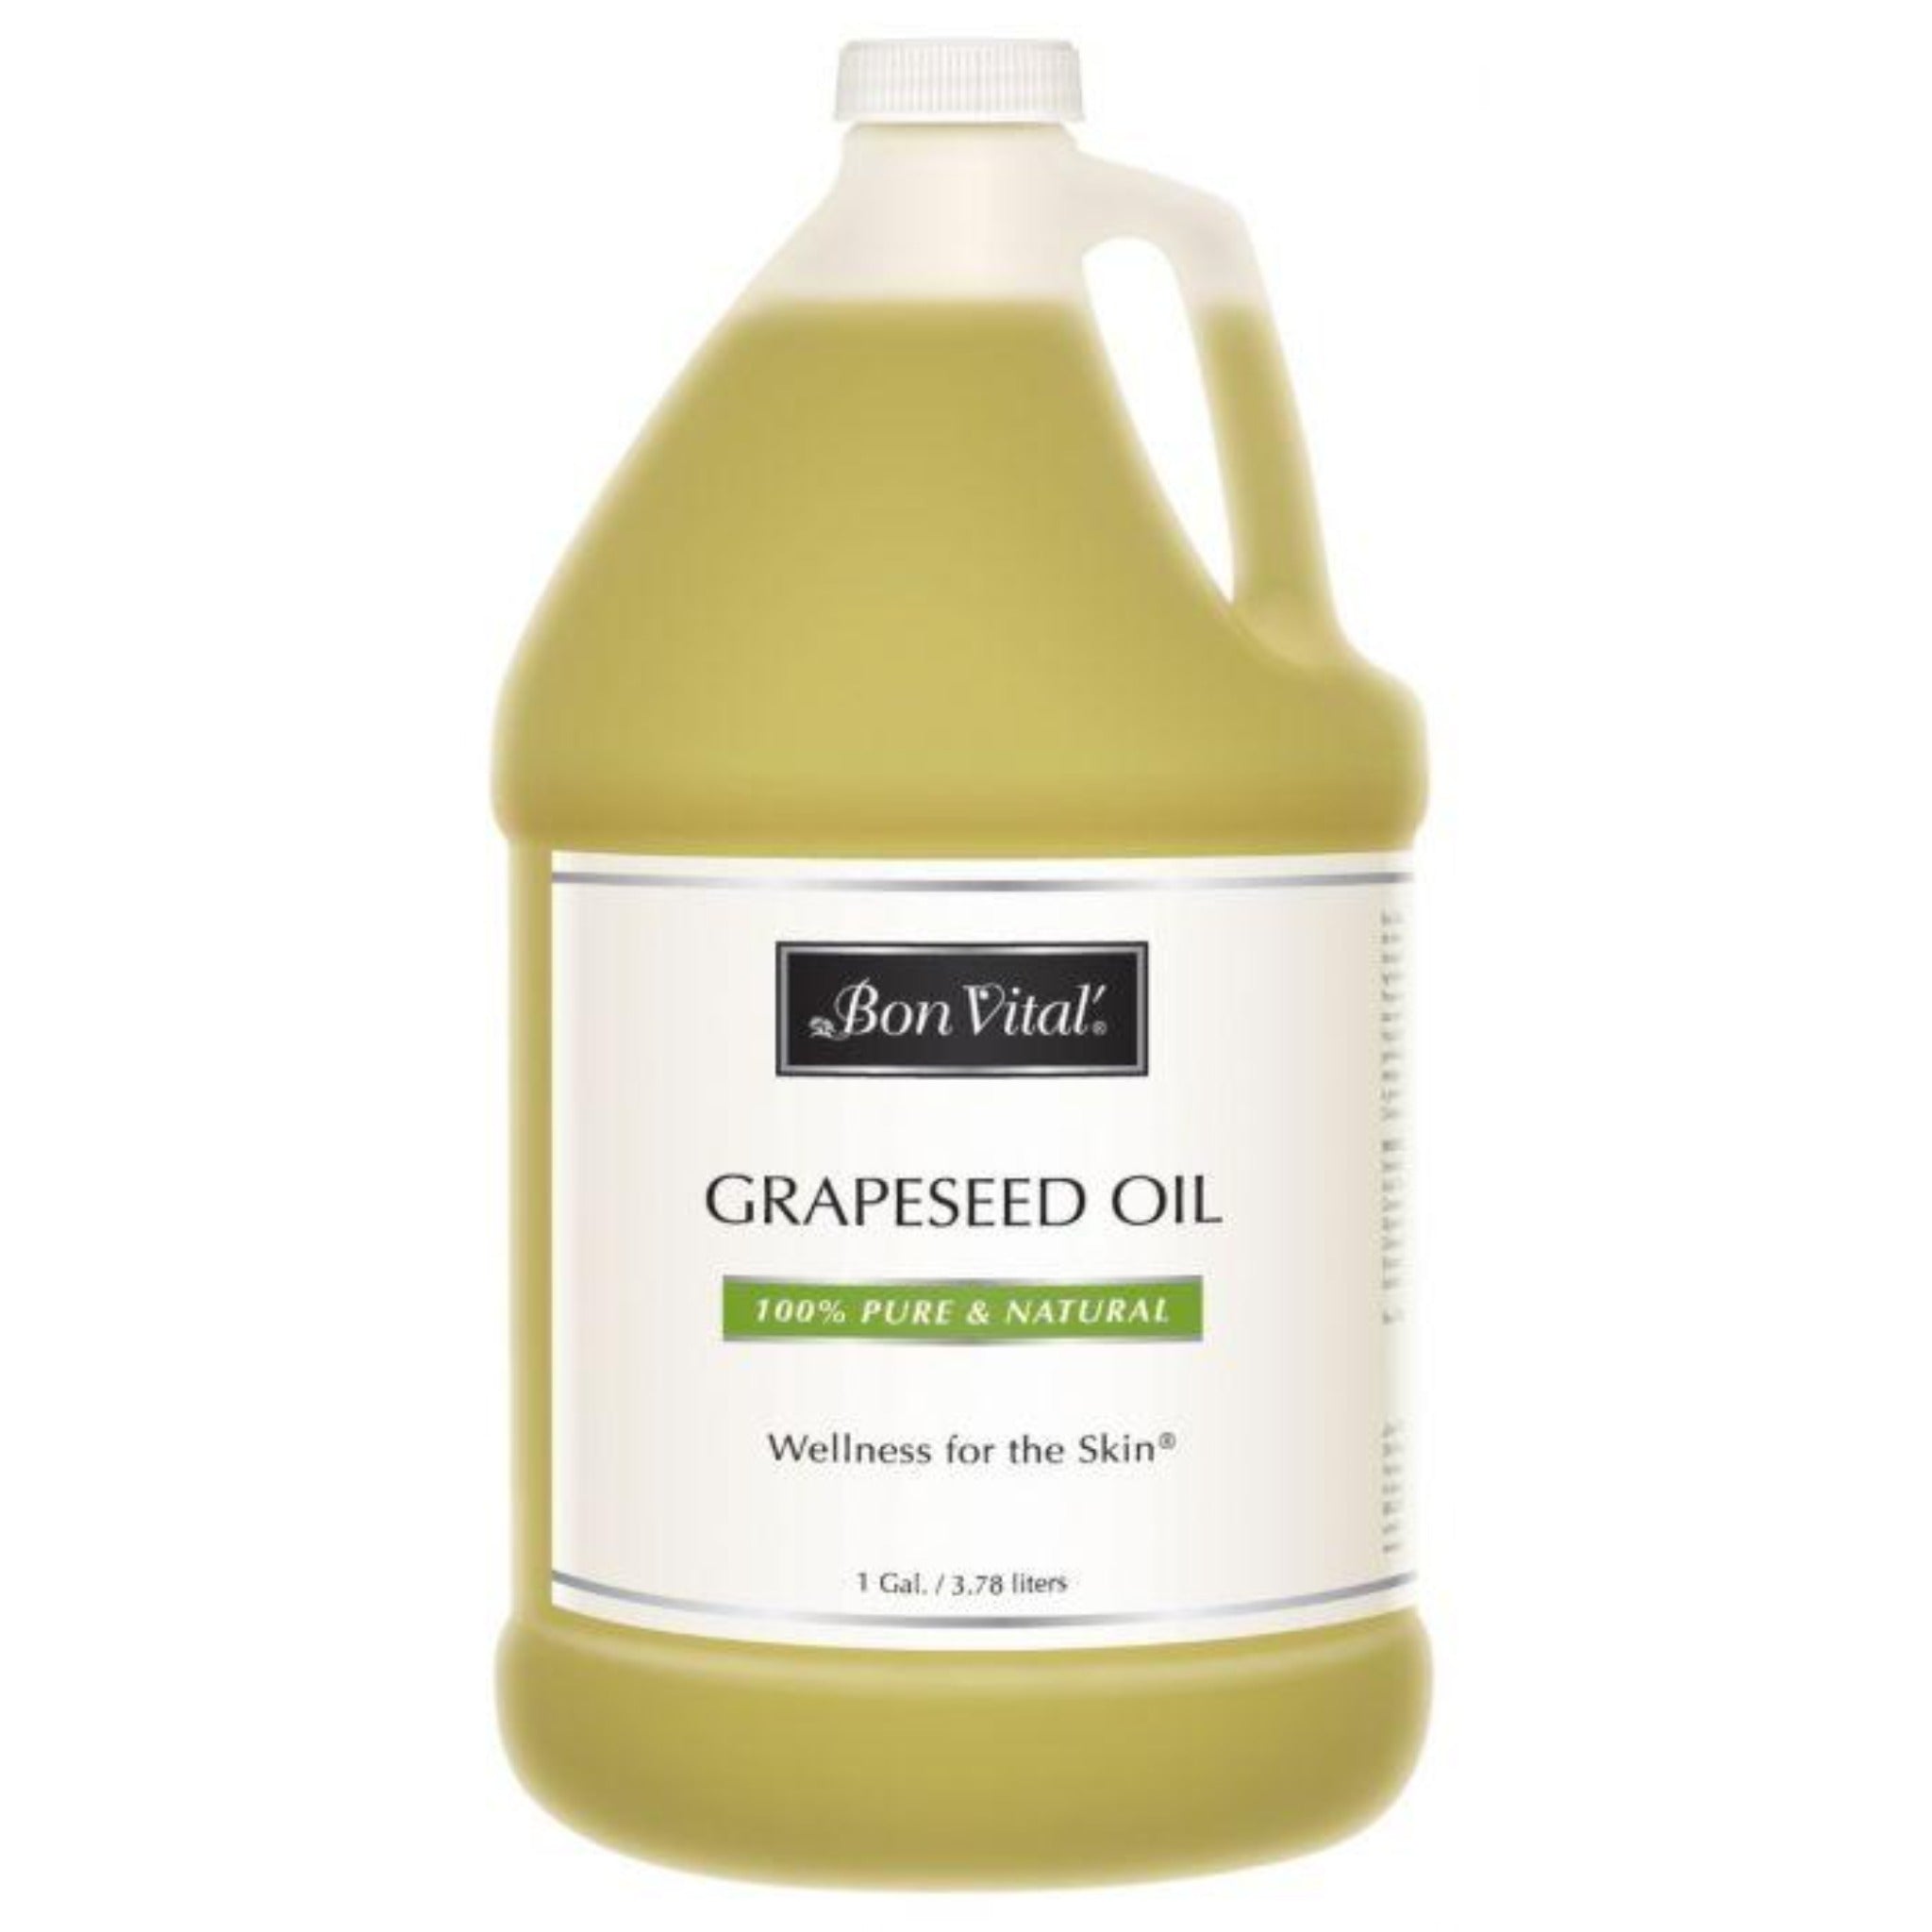 Bon Vital Grapeseed Oil